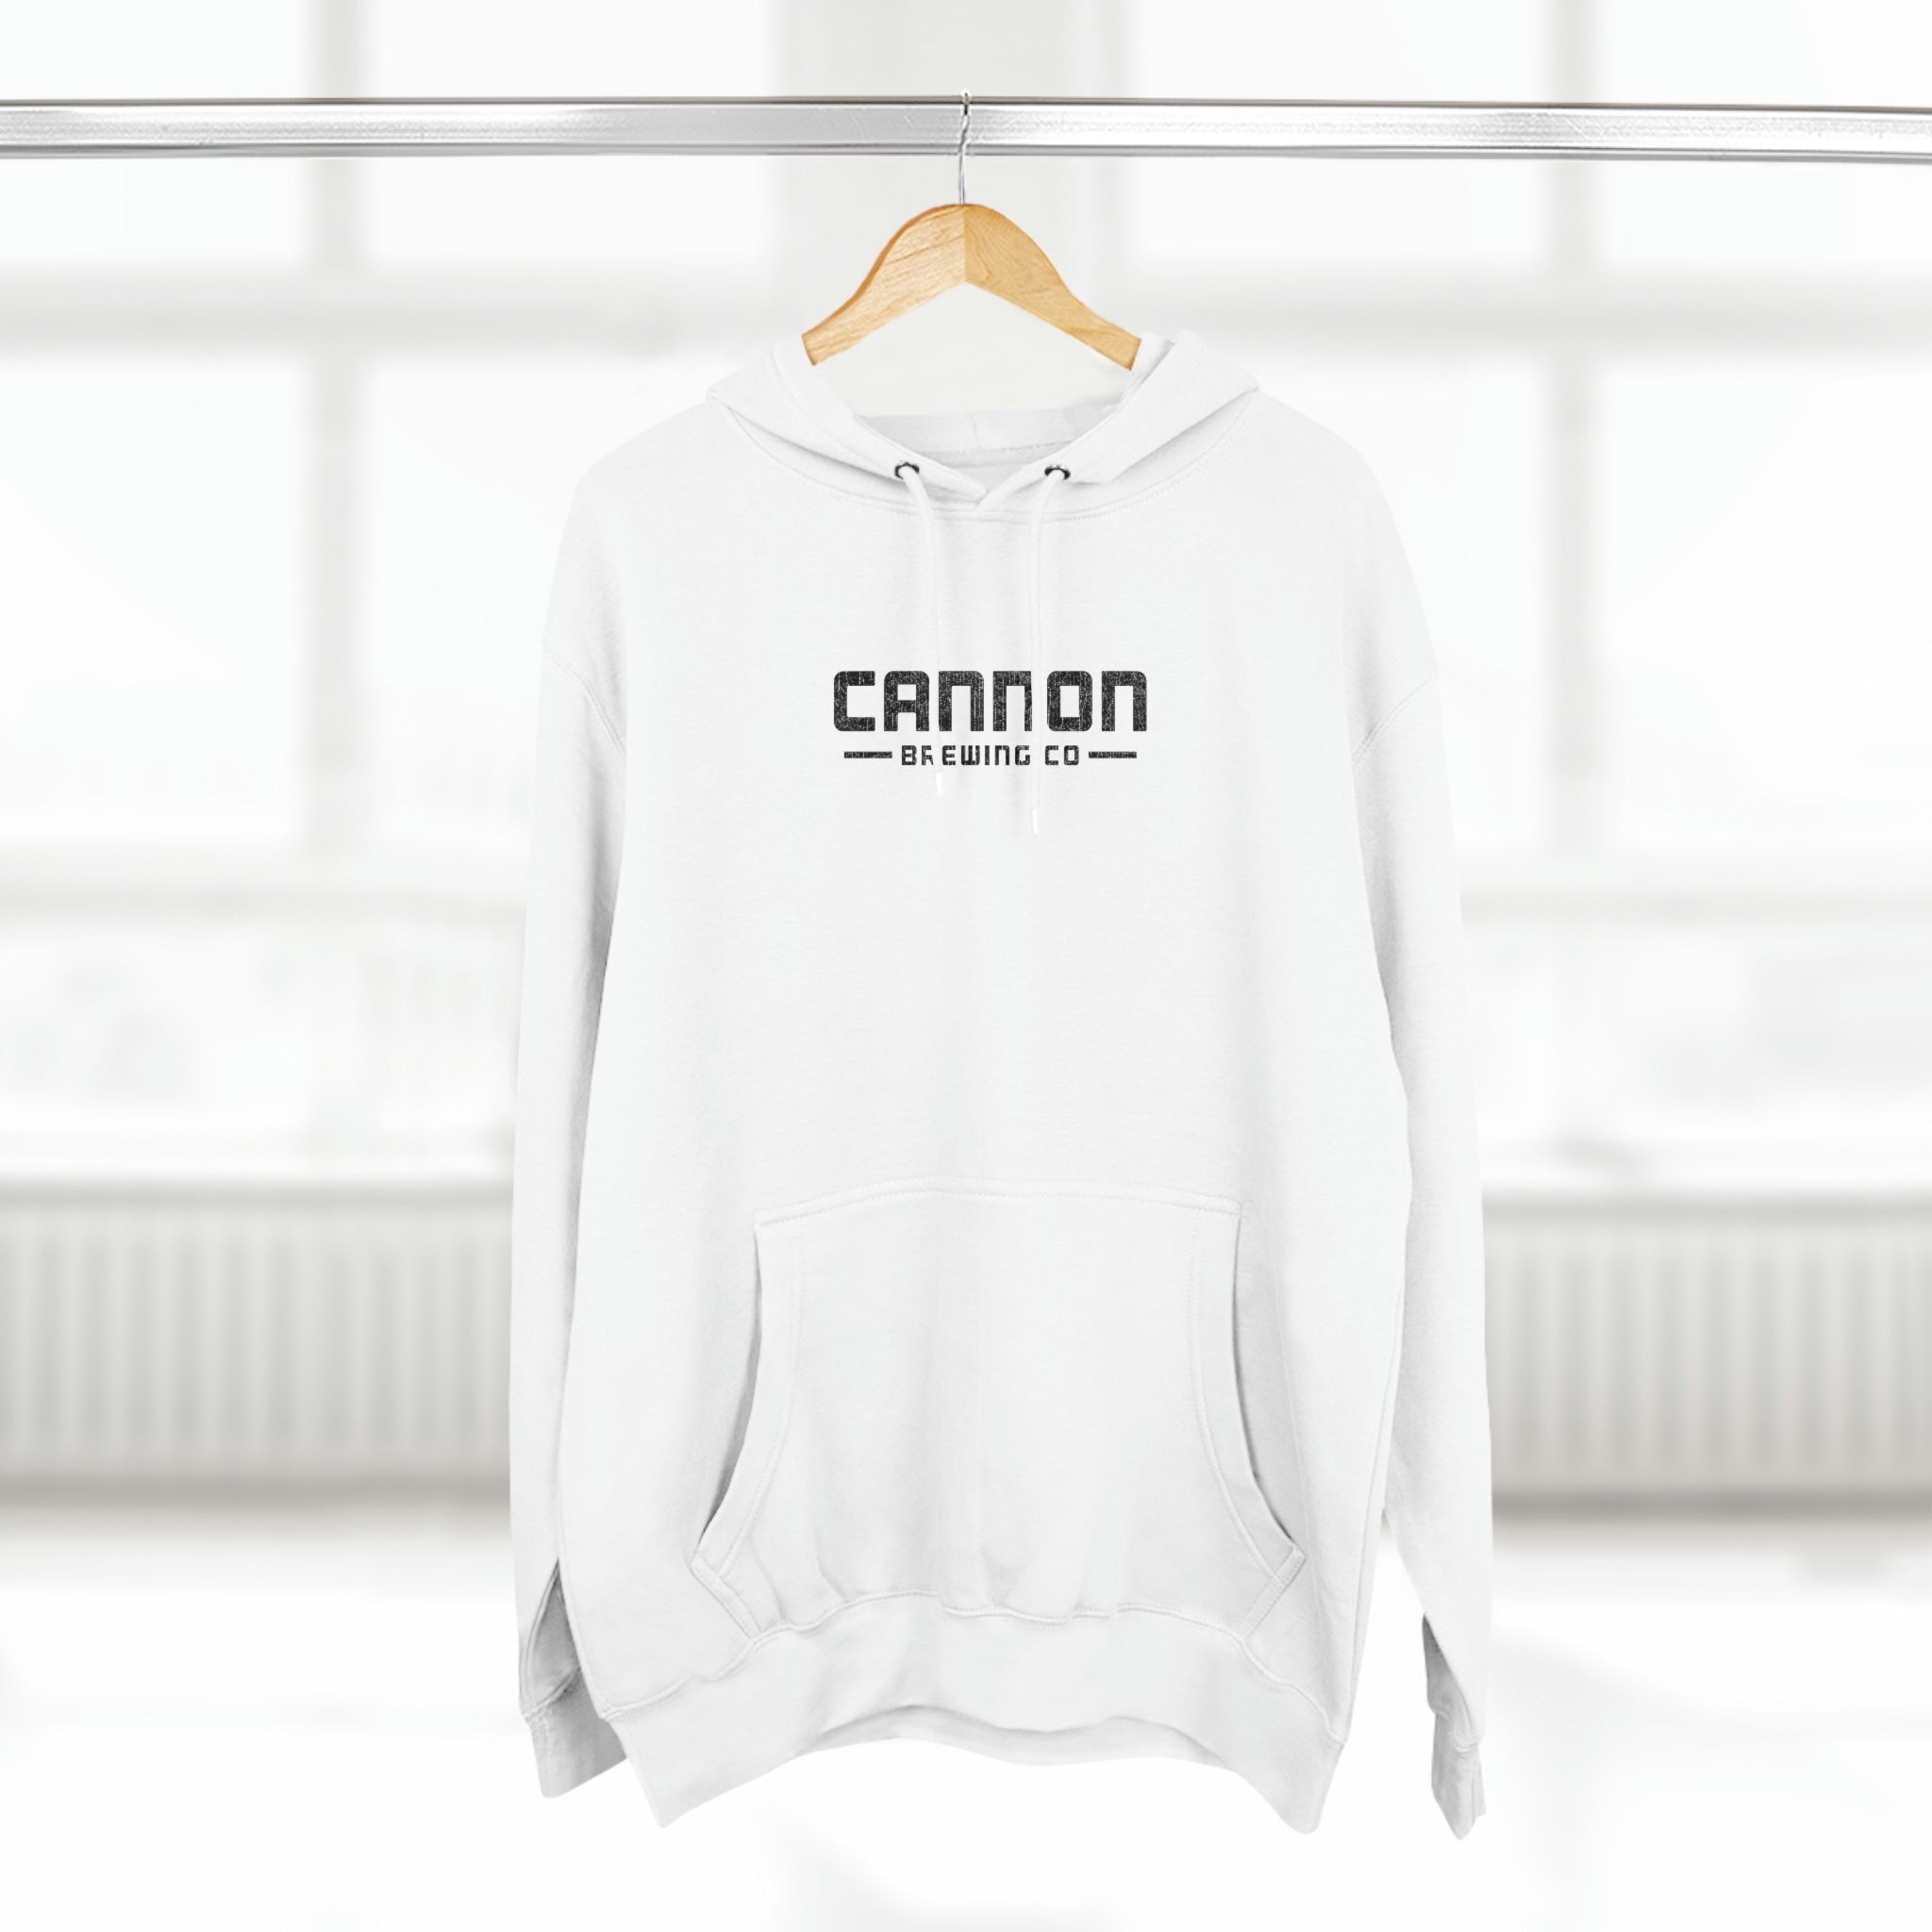 Cannon Brewing - Logo Centered - gold on dark or black on white - 80% cotton medium-heavy hoodie